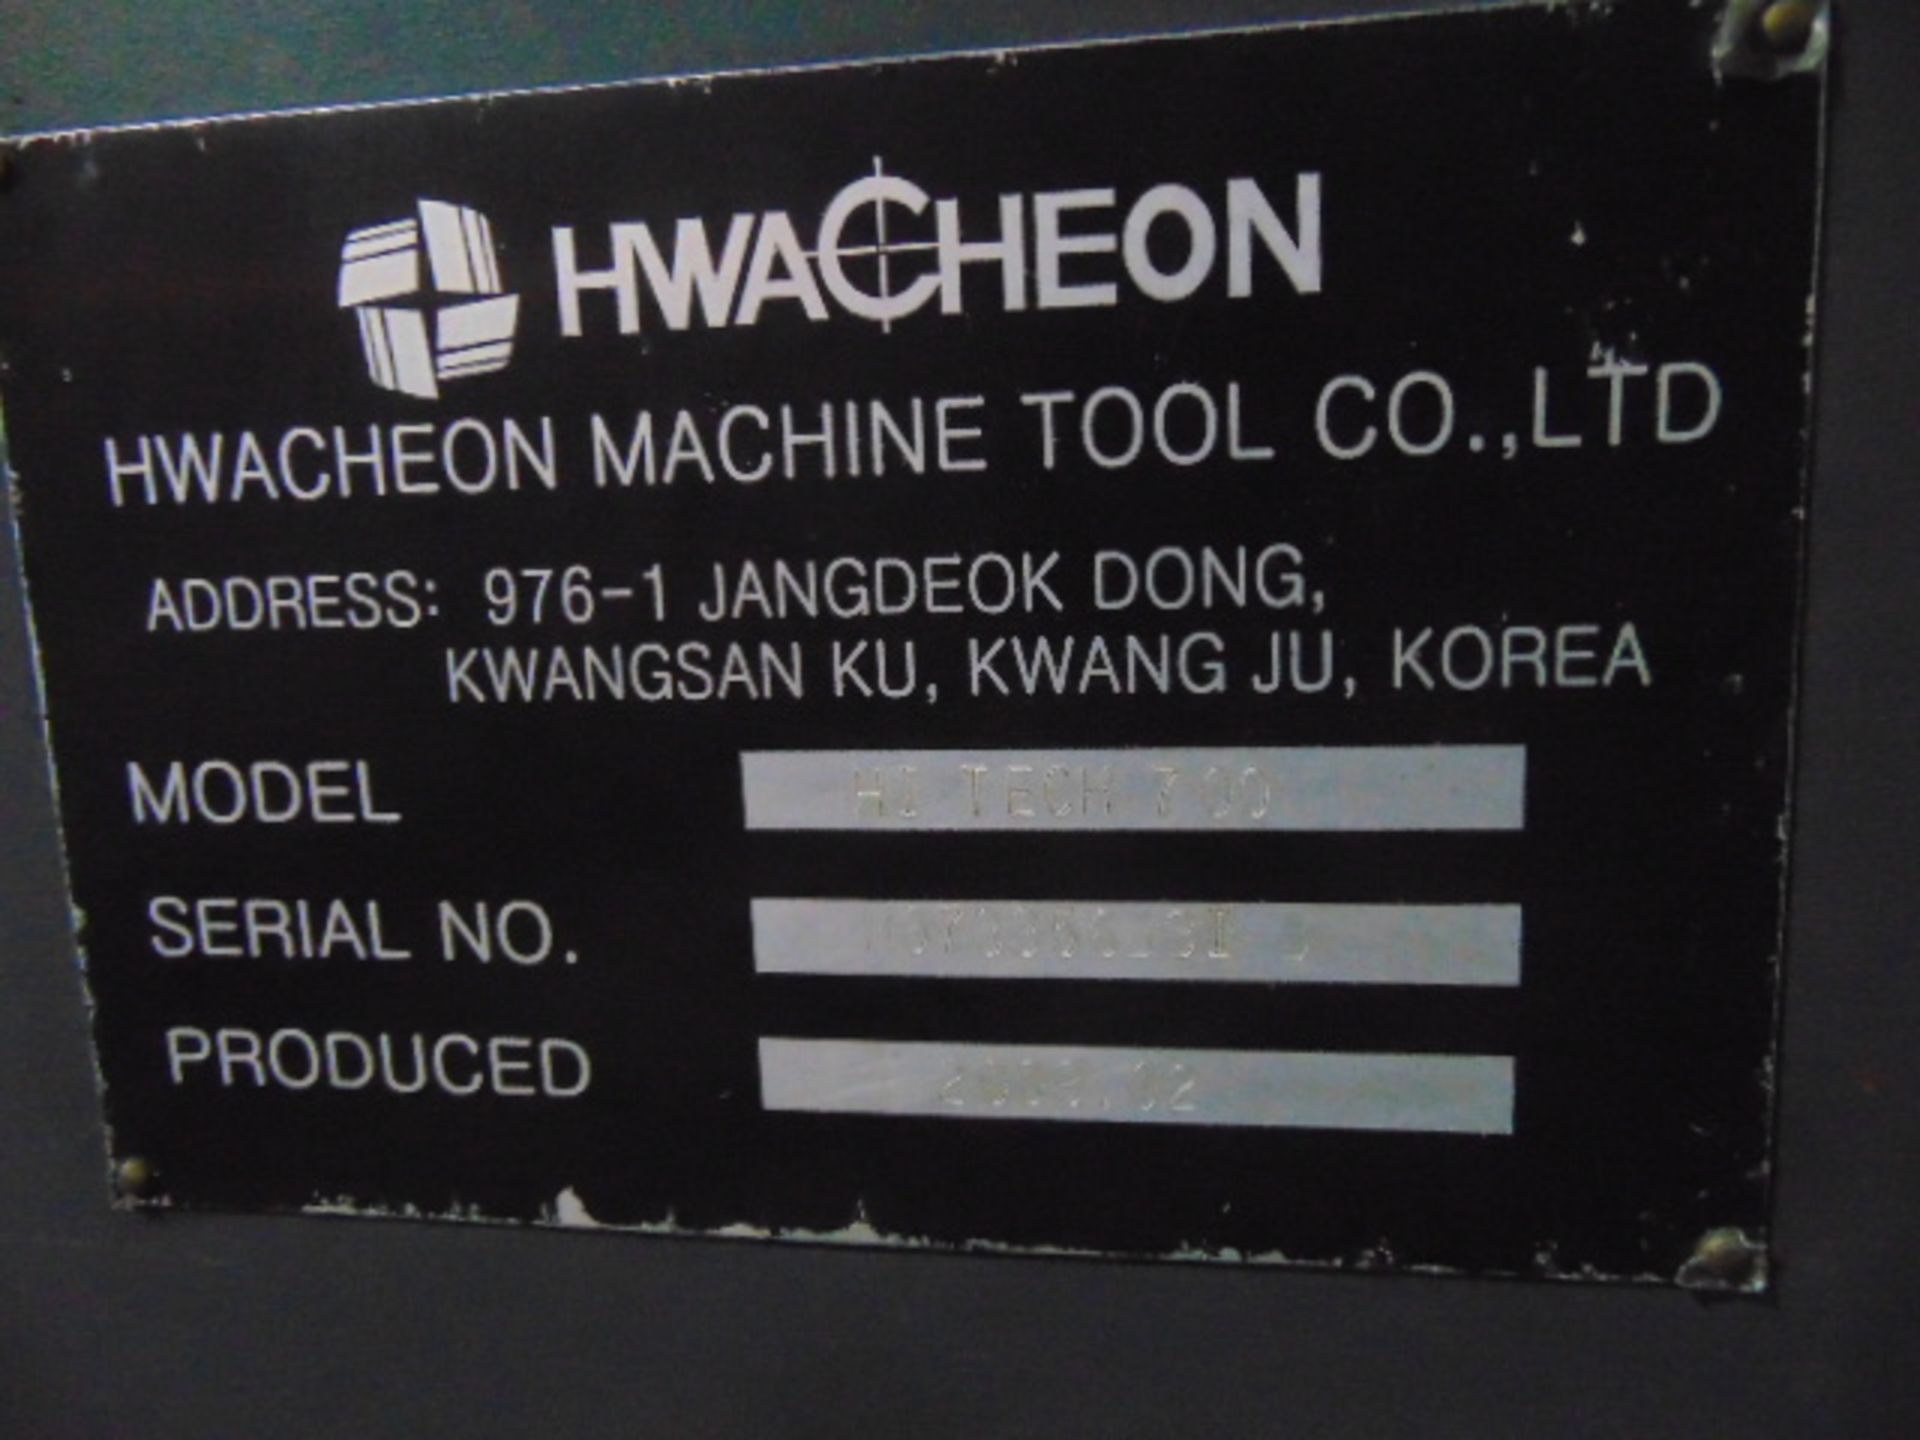 CNC LATHE, HWACHEON MDL. HITECH 700, new 2008, Fanuc Oi-TD CNC control, 27.56" max. cutting dia., - Image 4 of 17